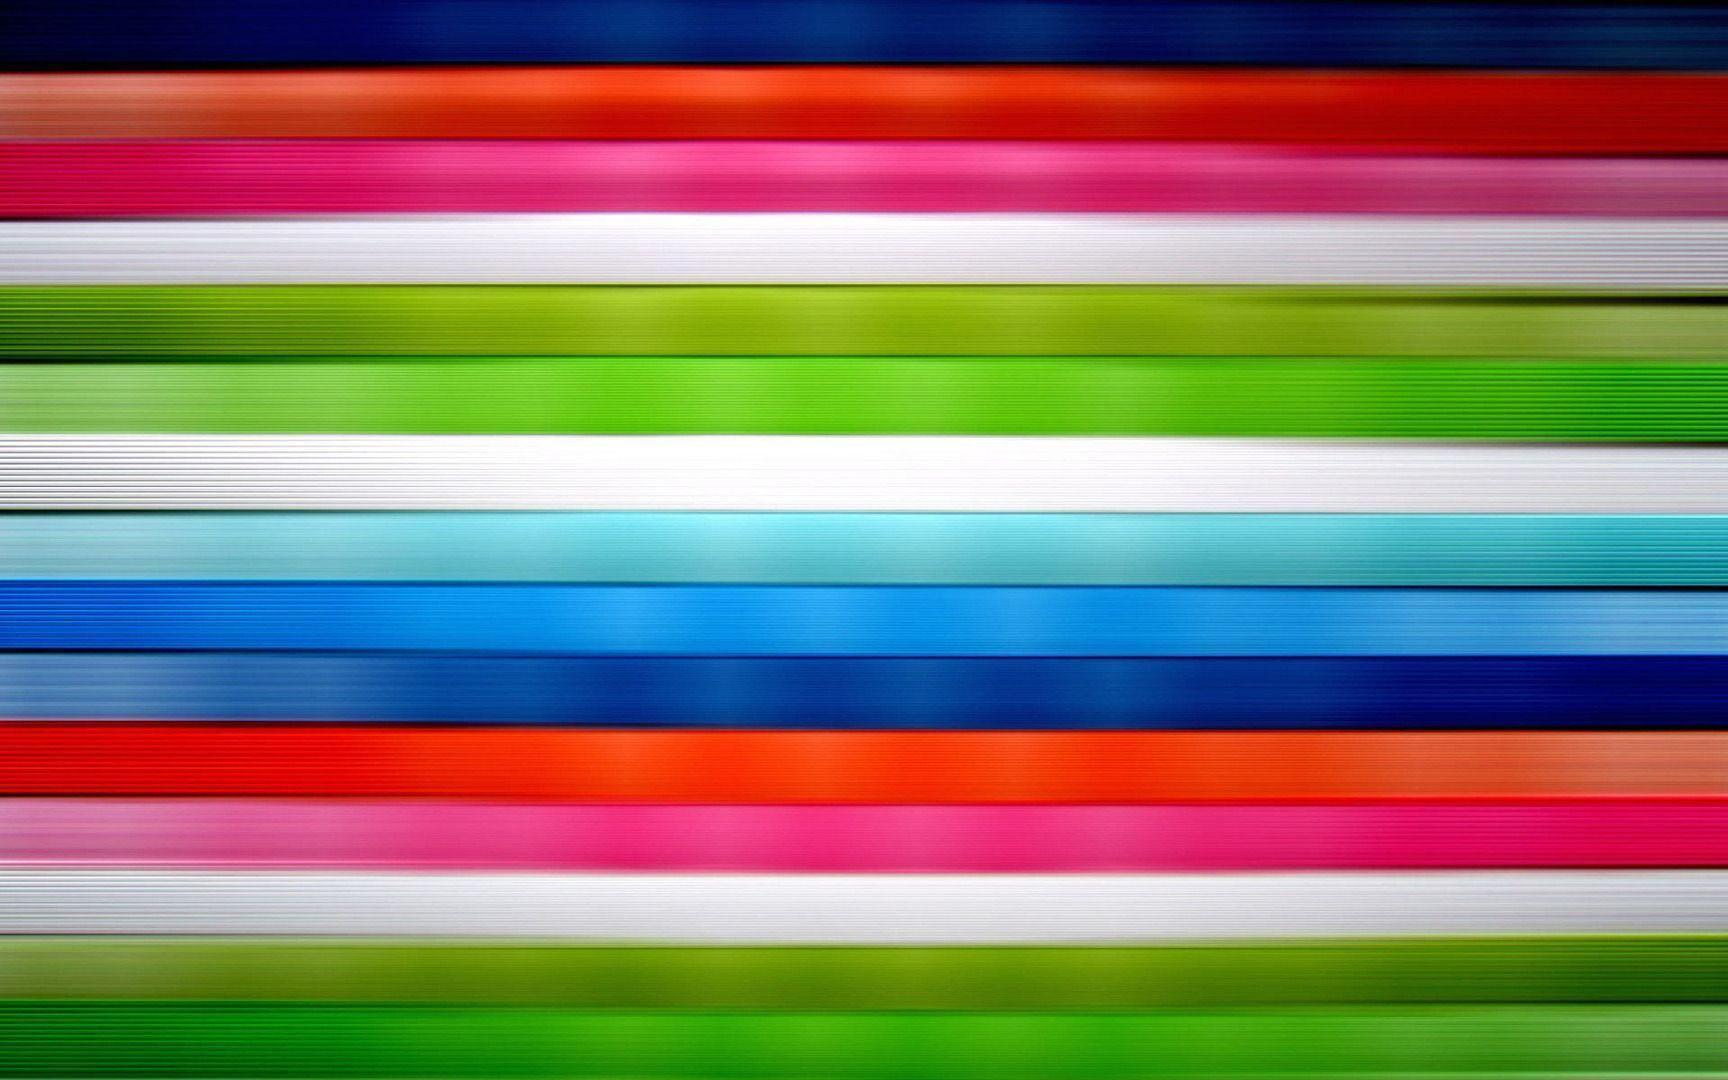 Striped Home Apple Mac Logo Color Stripes Wallpaper 1600x1200 px